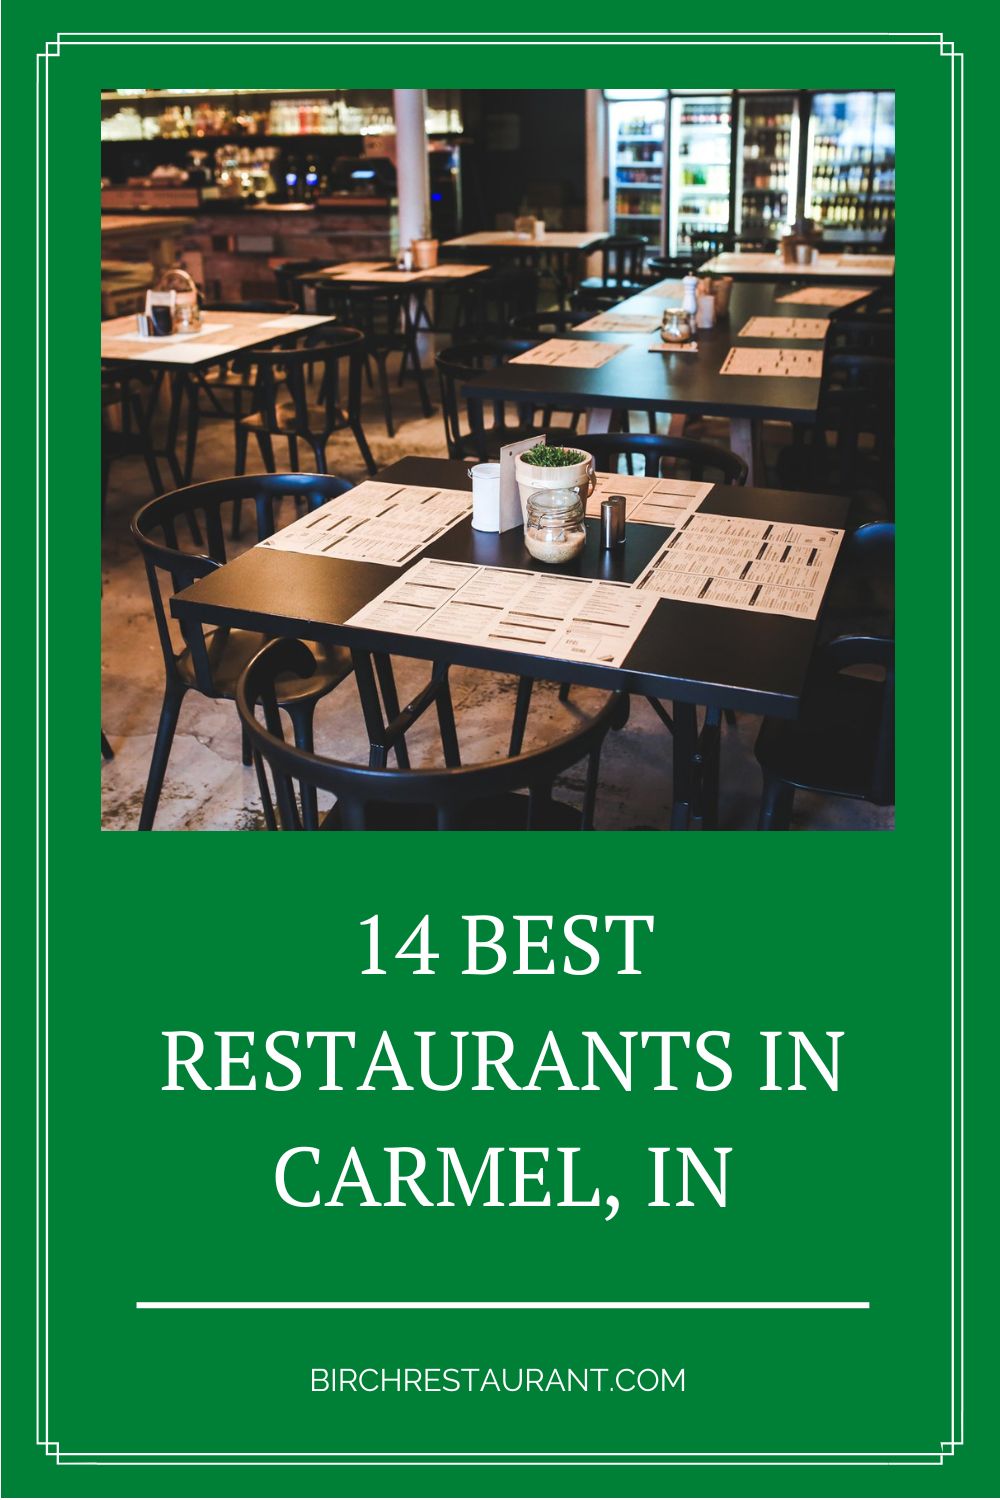 Best Restaurants in Carmel